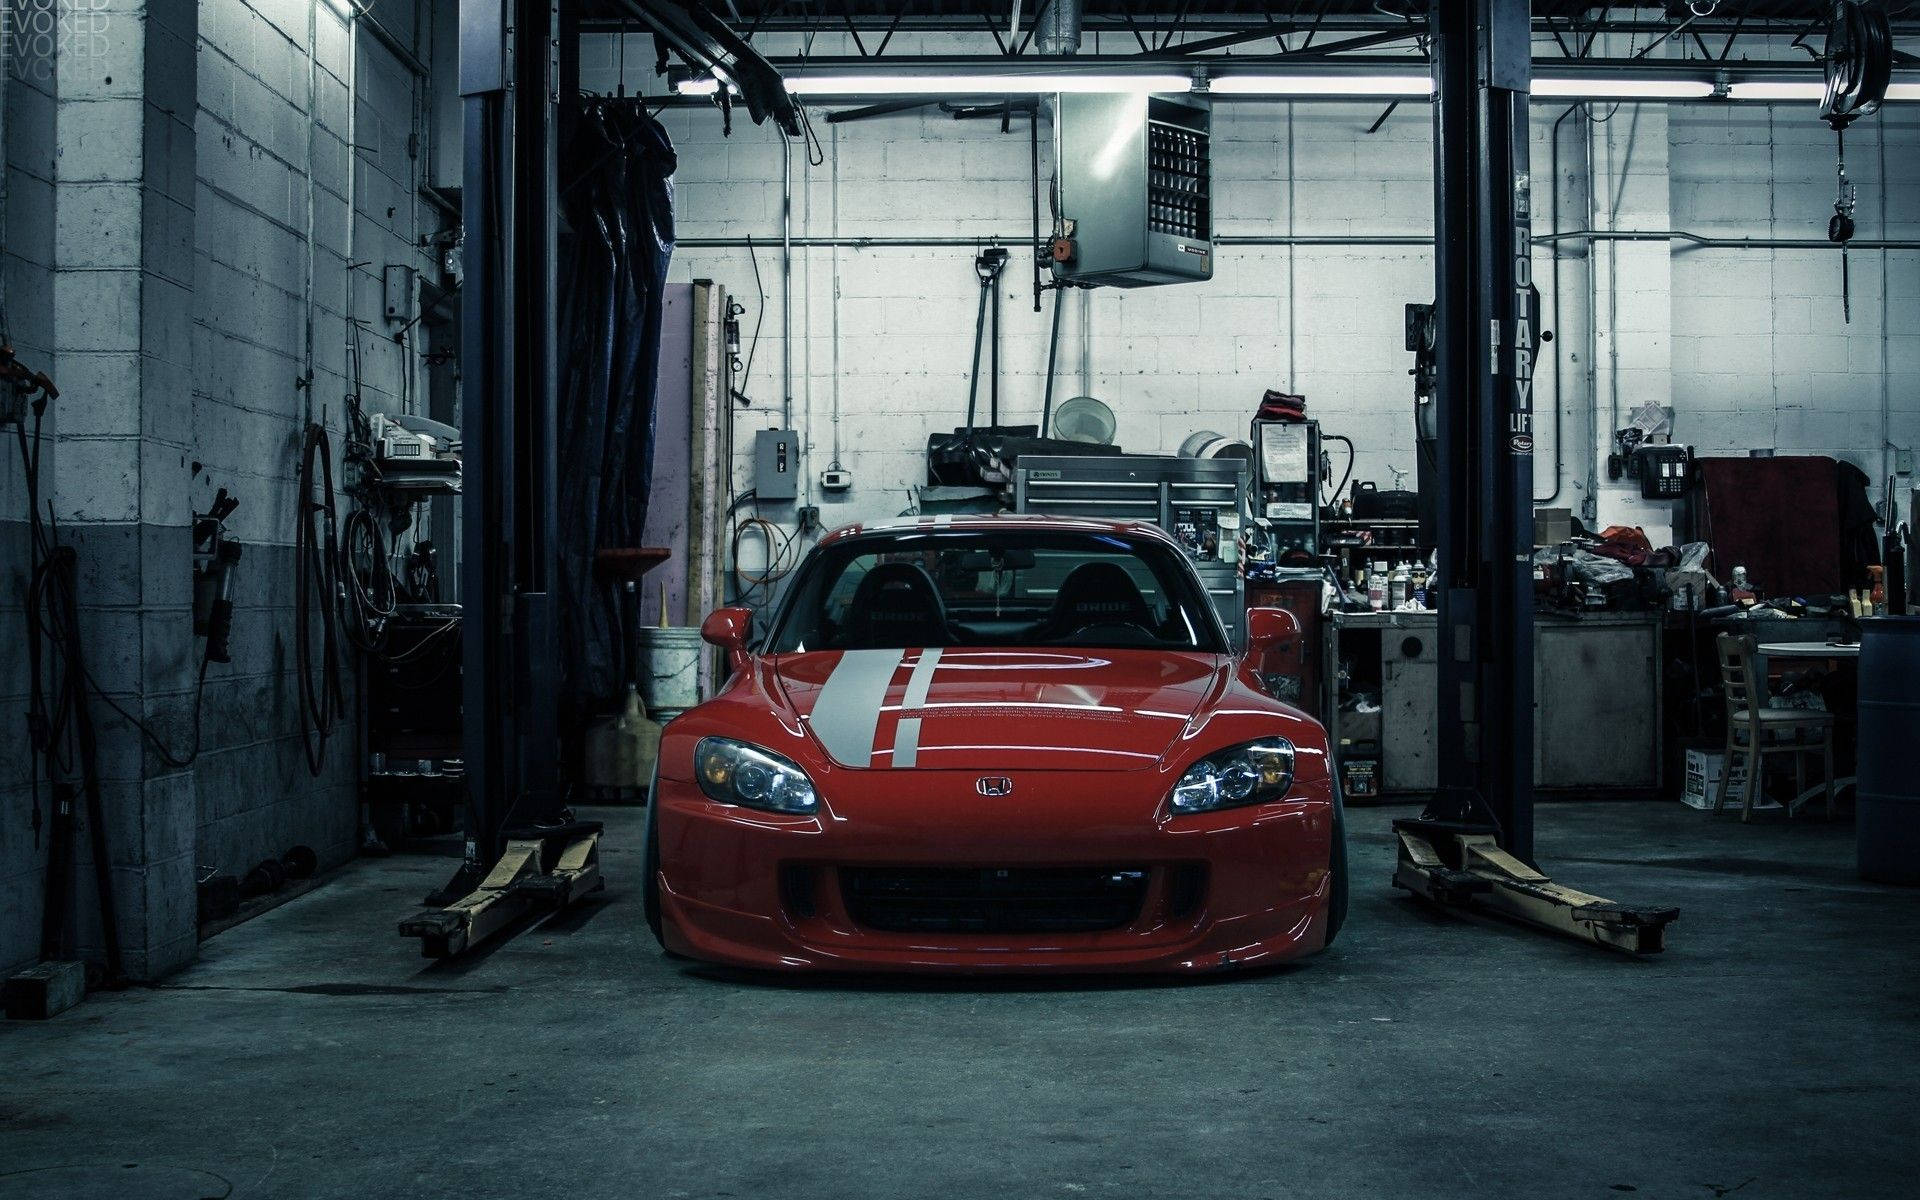 car in the garage